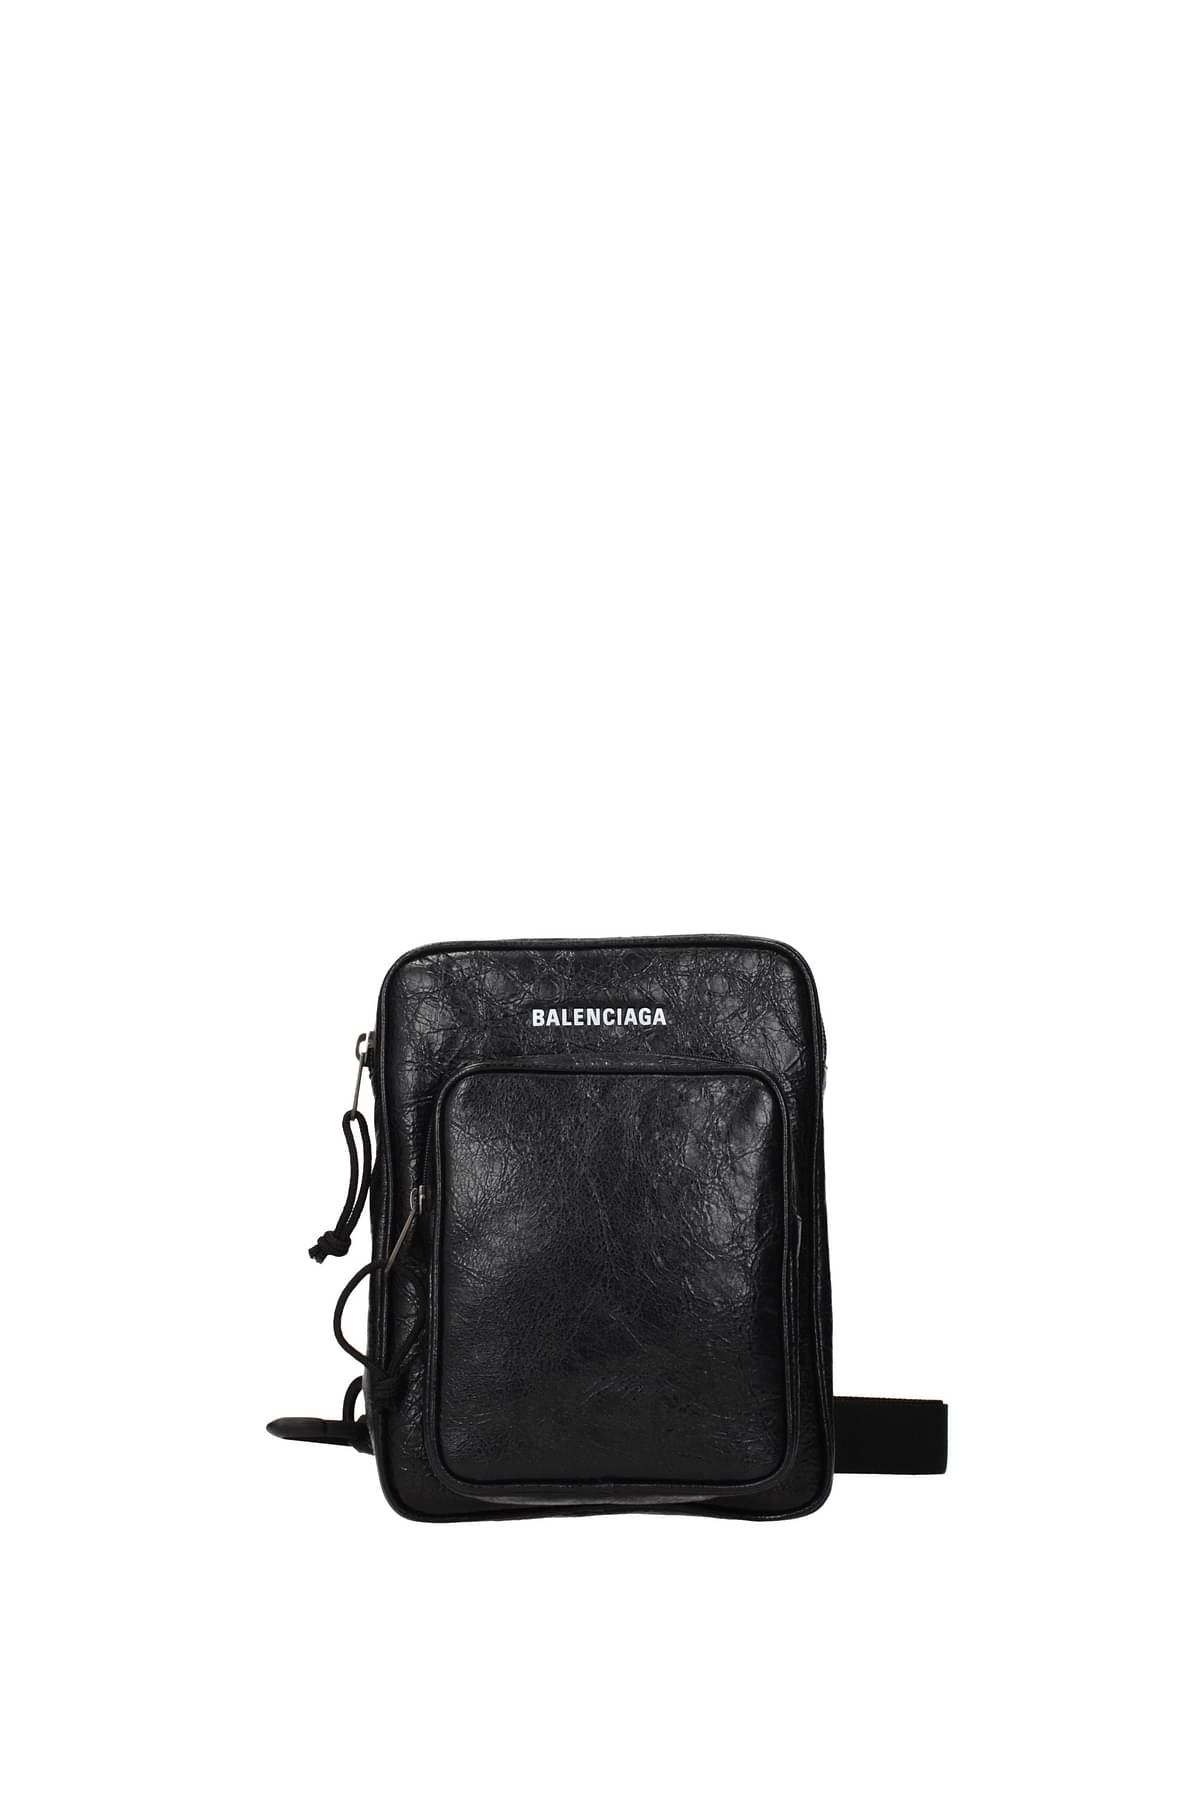 Balenciaga - Crossbody bag for Man - Black - 6695381VGI71000